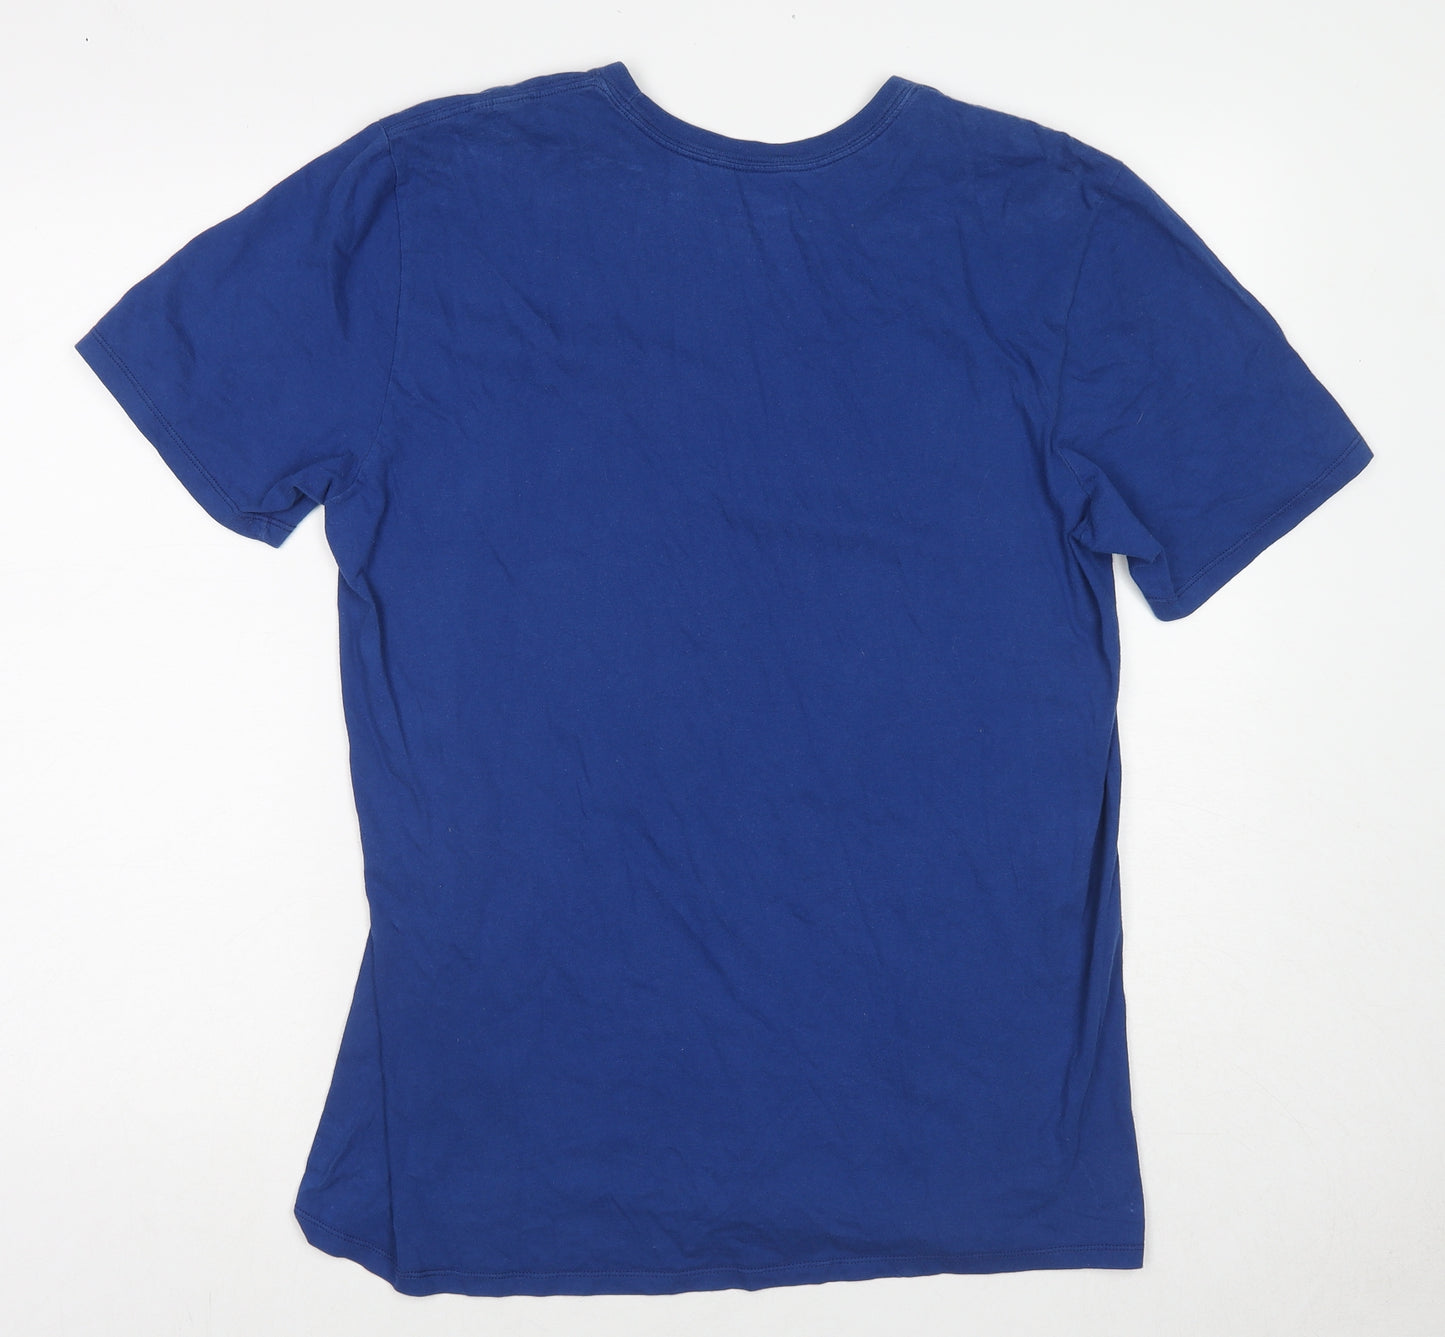 Nike Mens Blue Cotton T-Shirt Size L Round Neck